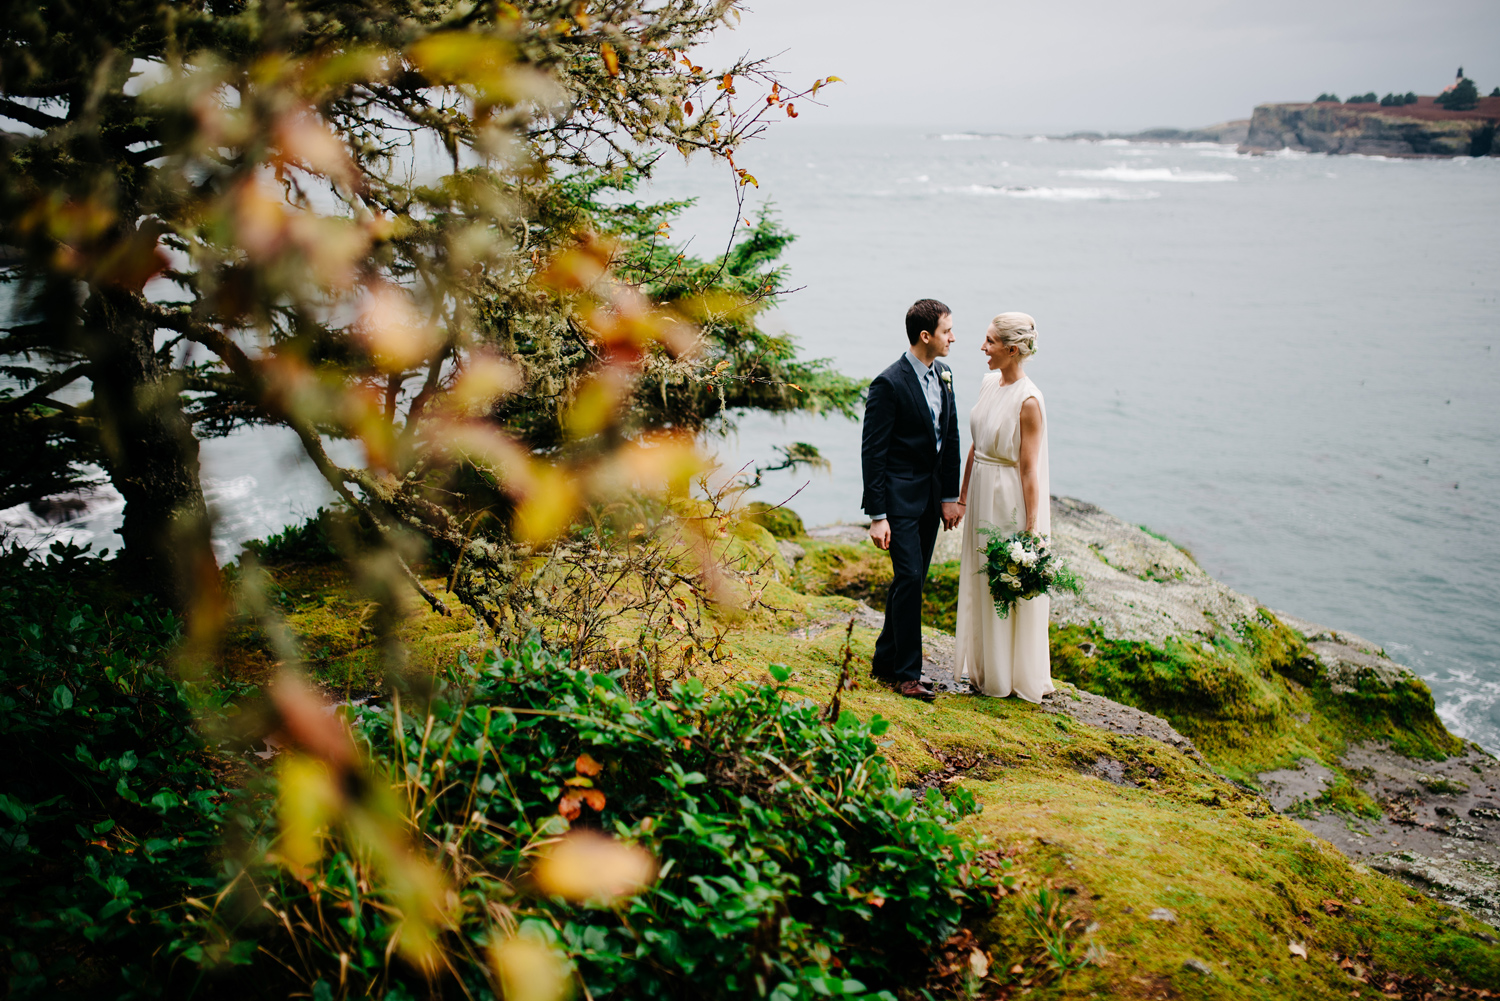 024-pnw-coastal-elopement-at-cape-flattery-by-seattle-wedding-photographer-ryan-flynn.jpg